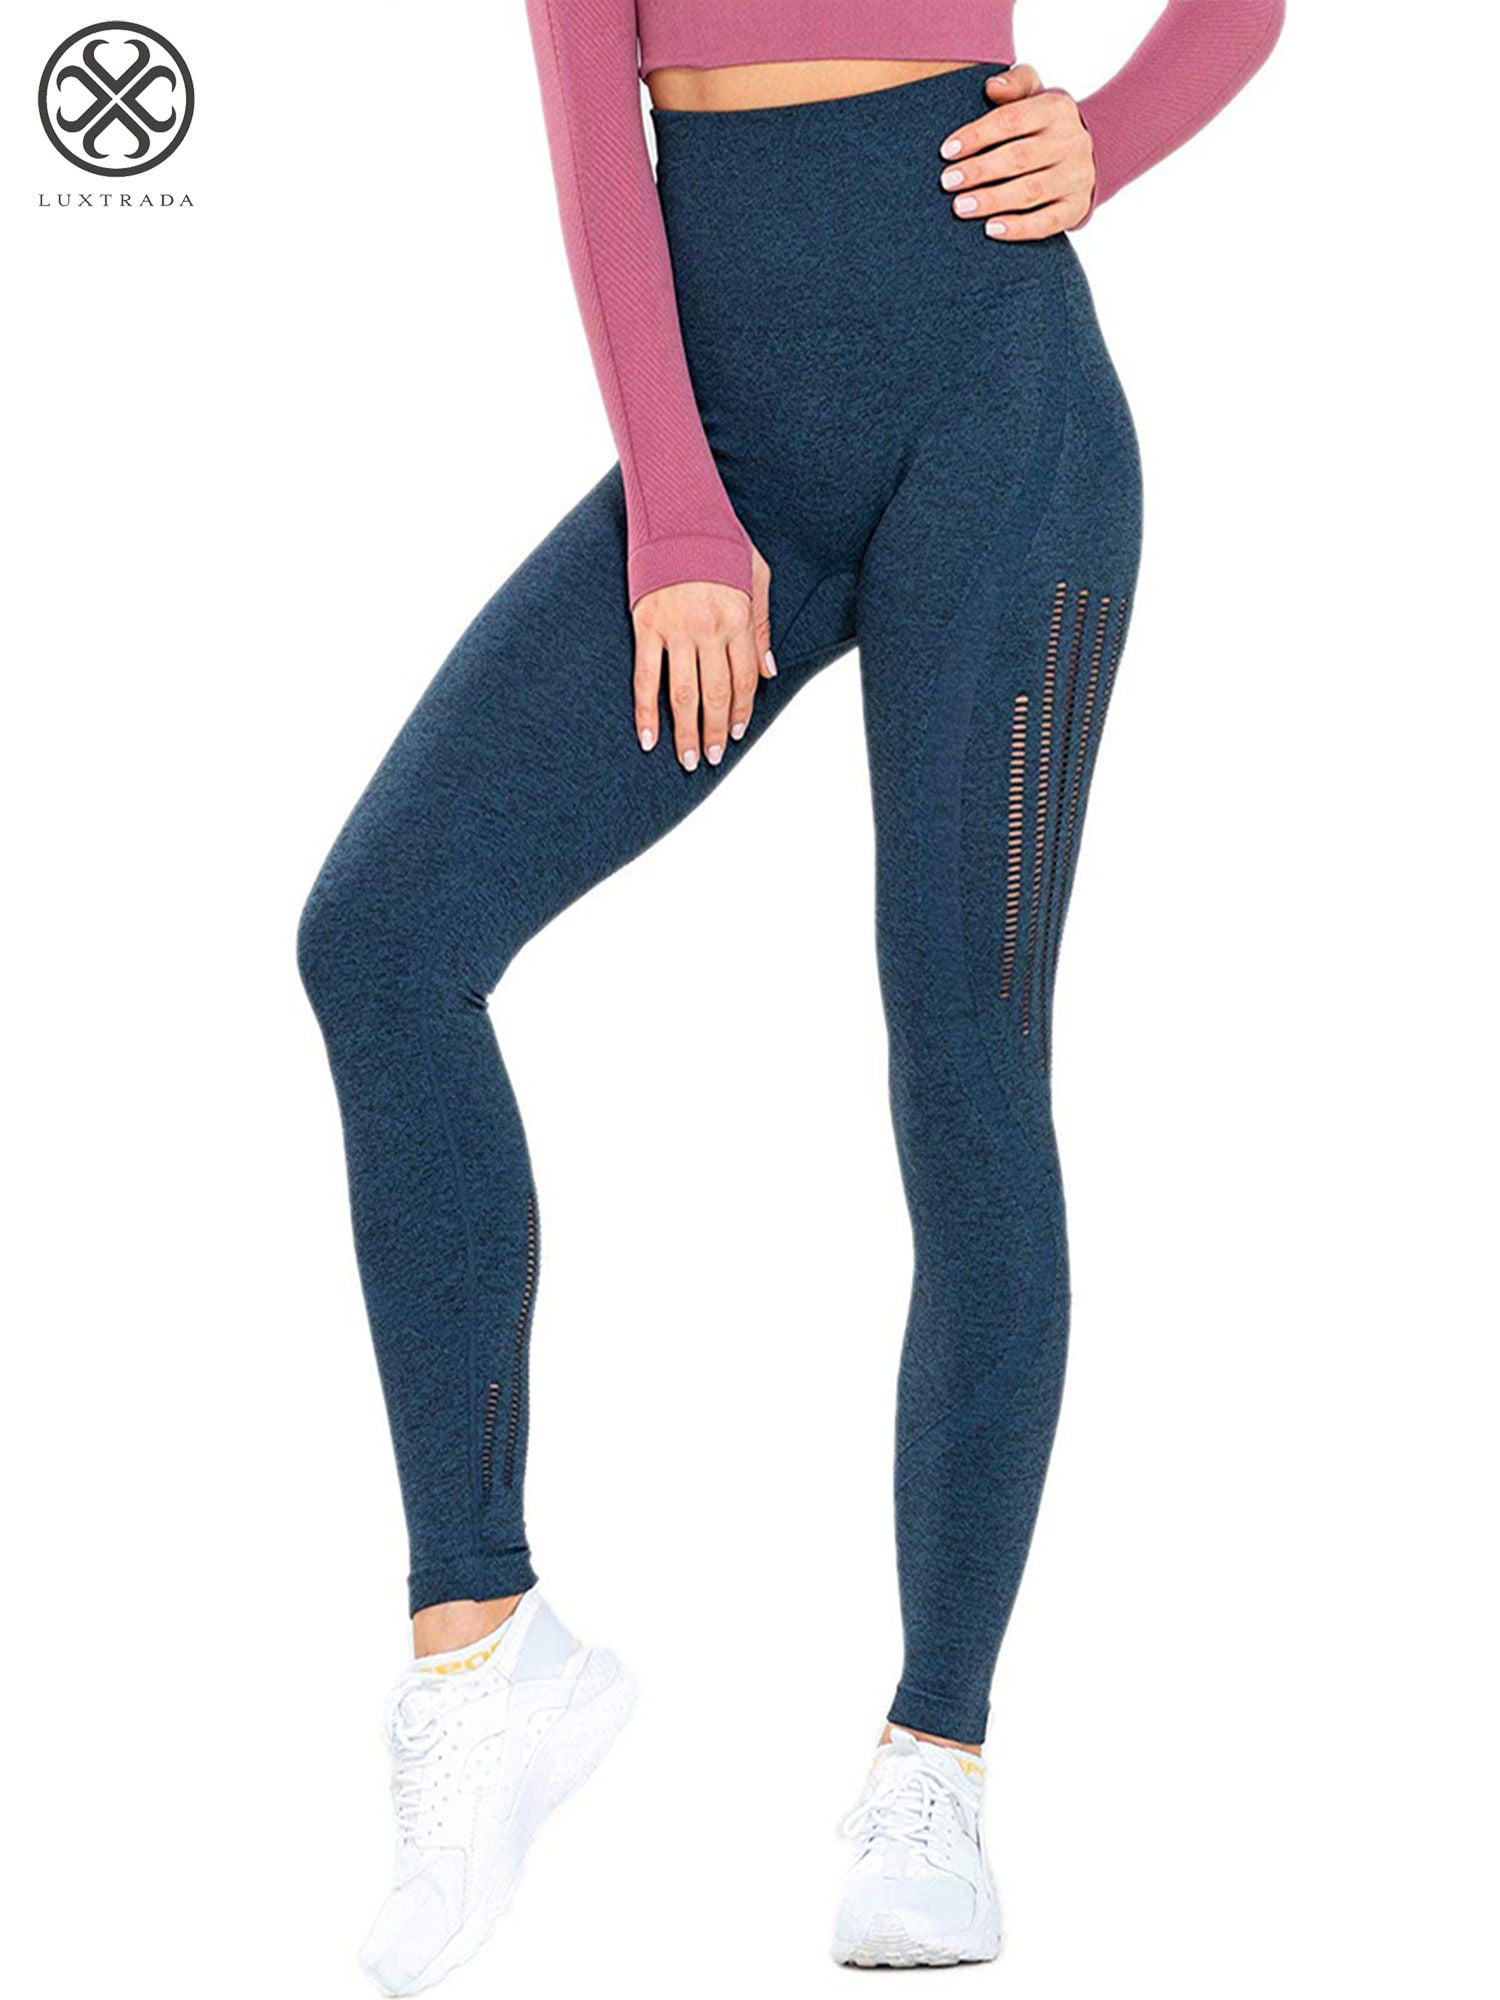 OUGES Womens High Waist Pockets Yoga Pants Running Pants Workout Gym Leggings 